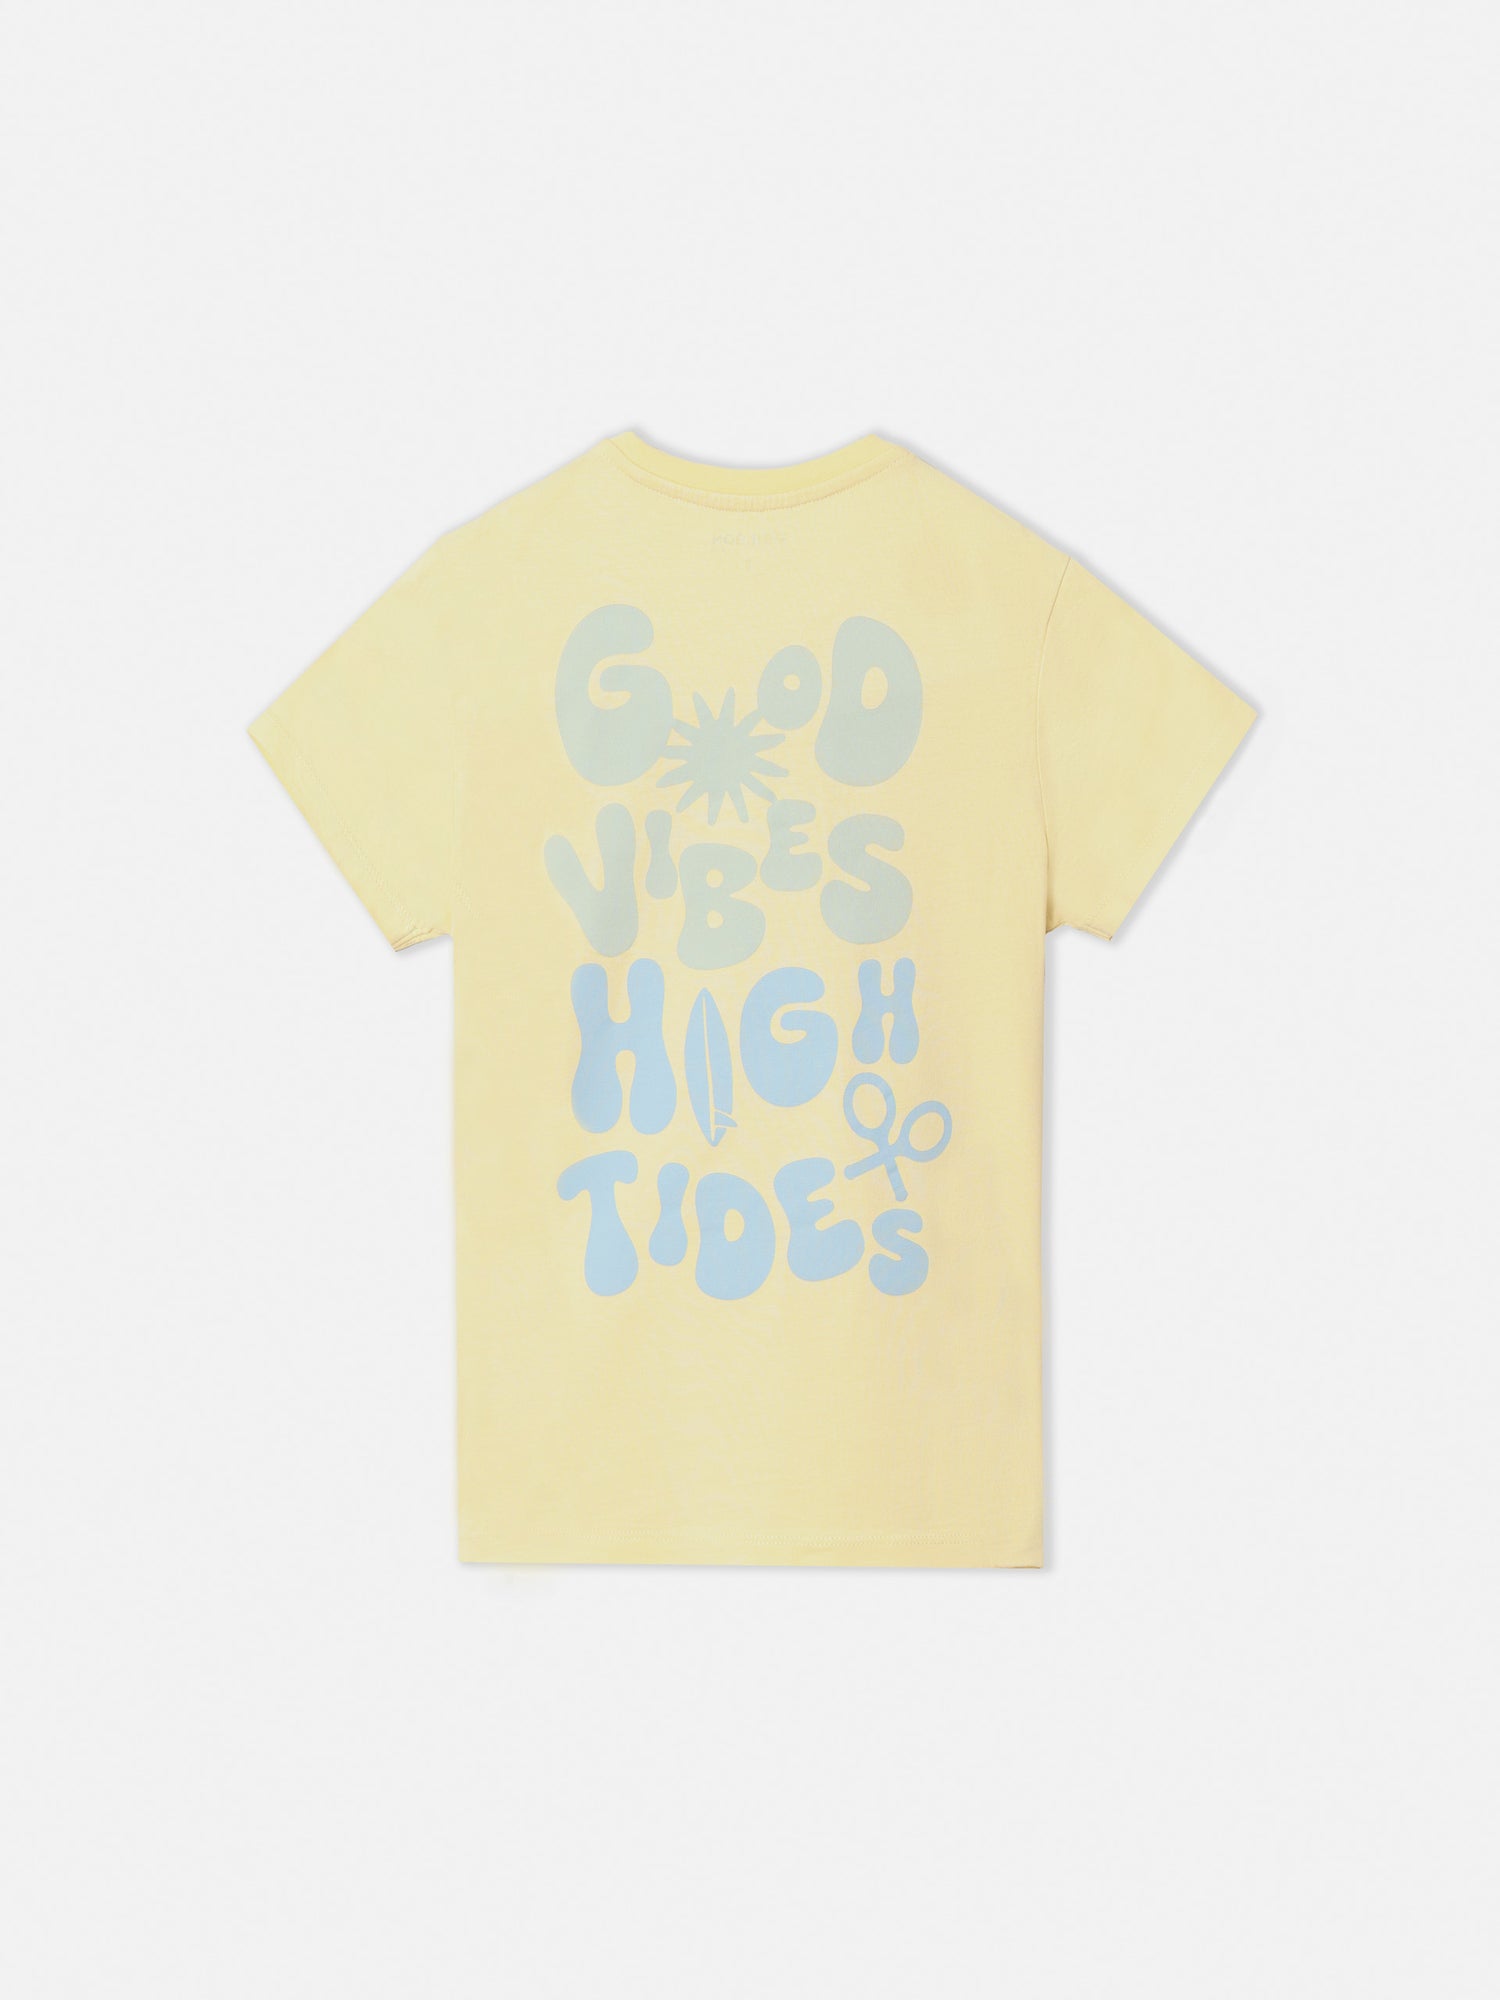 Camiseta kids high tides amarilla